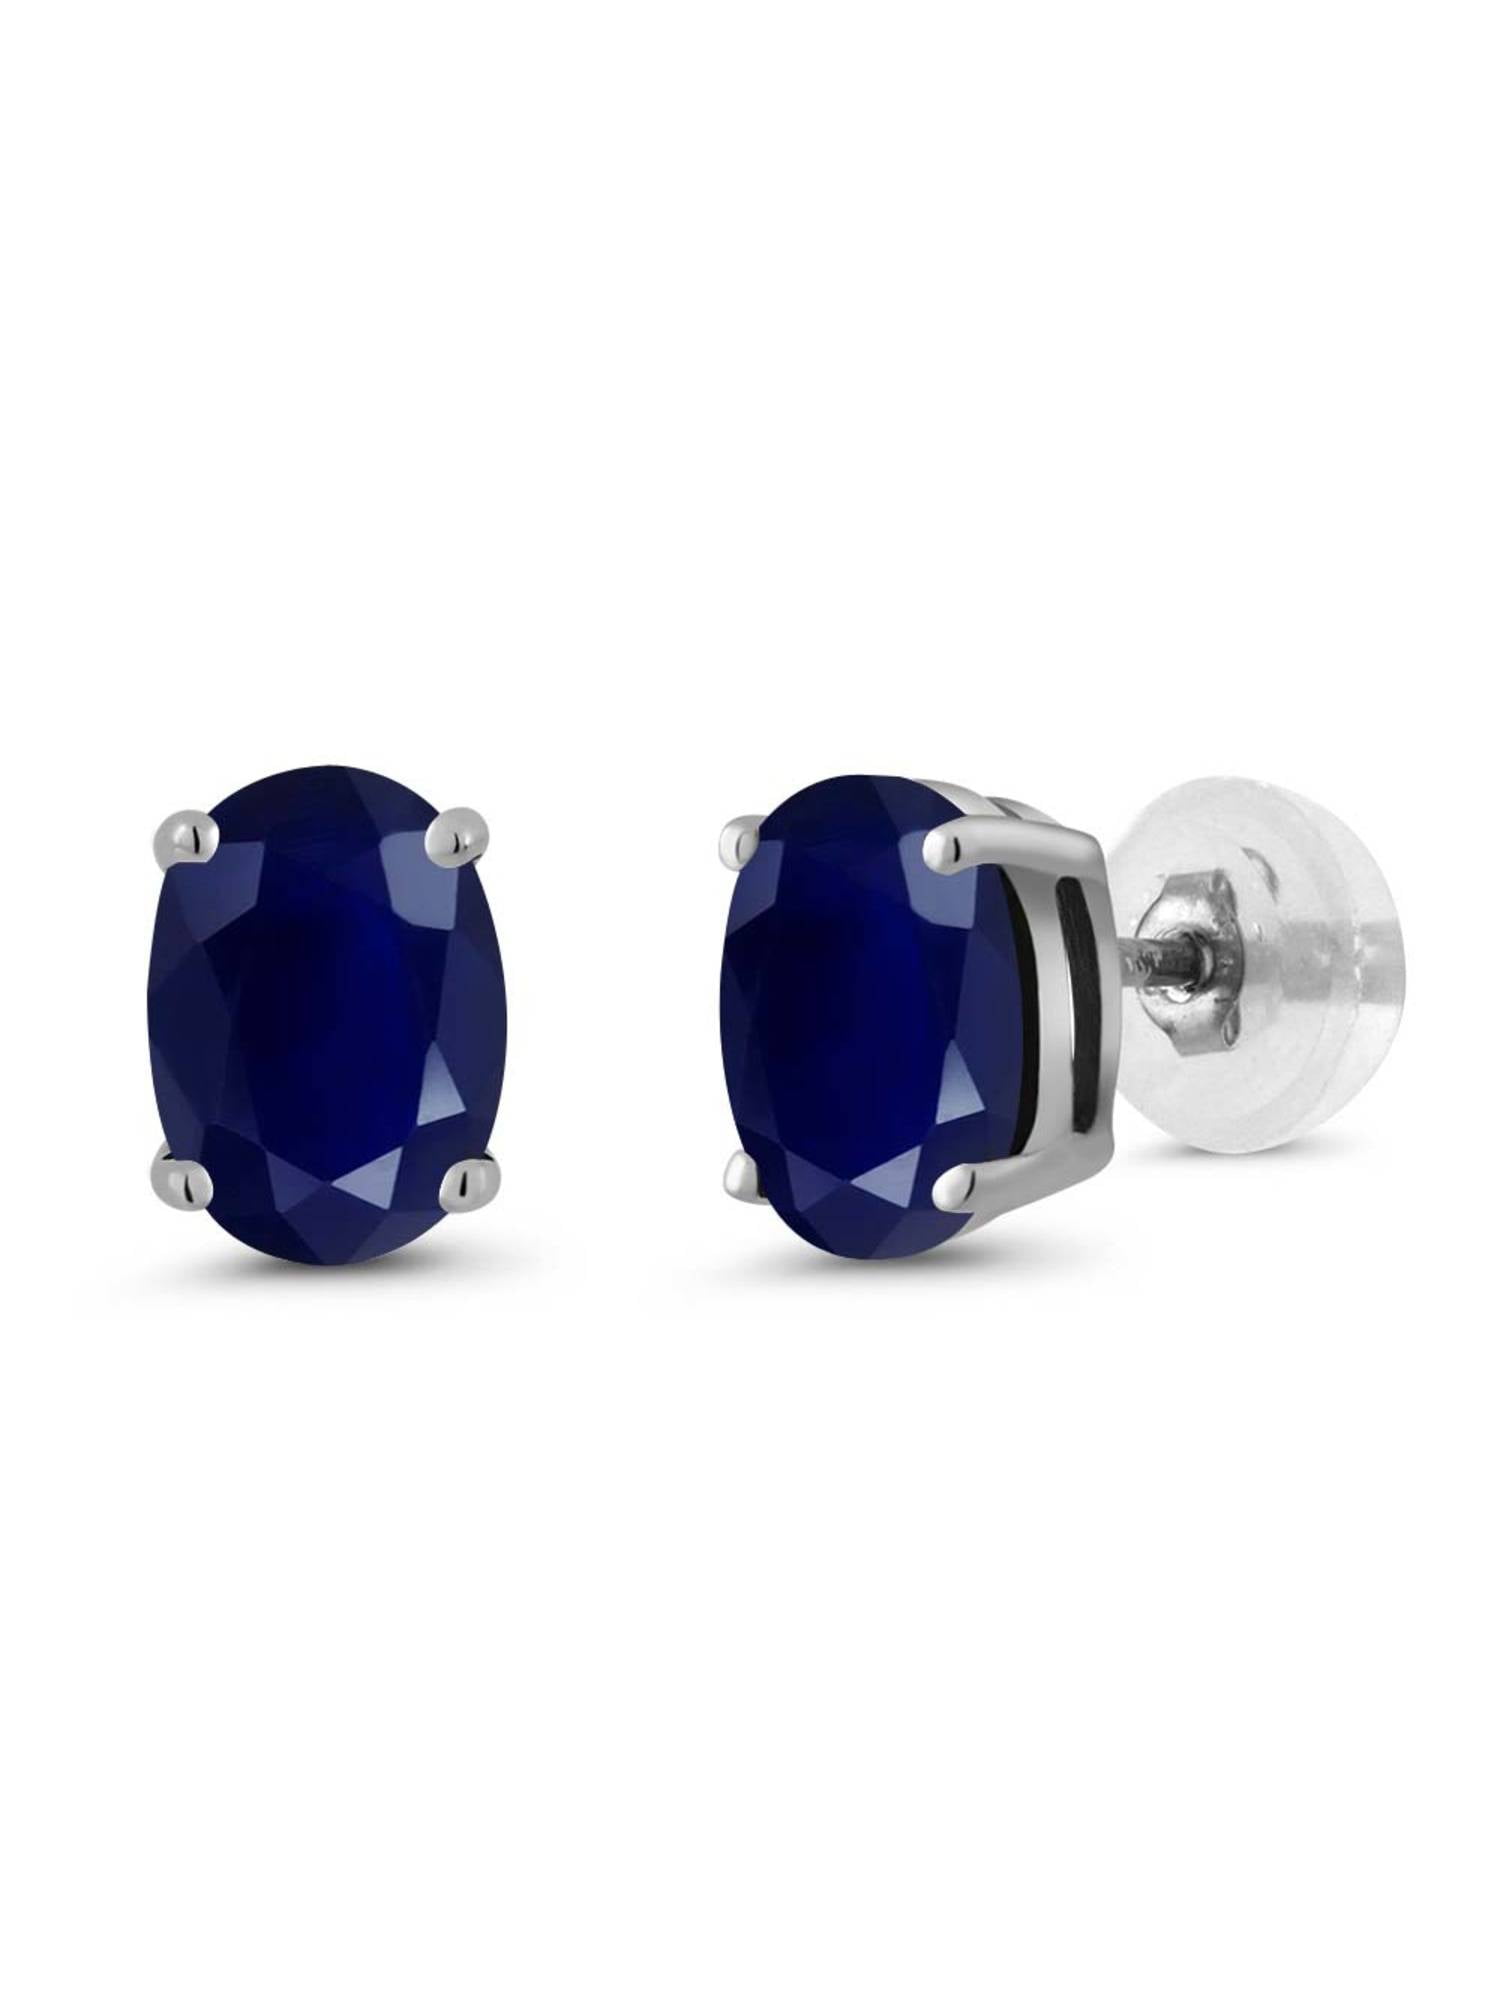 Gem Stone King 14K White Gold Blue Sapphire Women Stud Earrings 2.04 Cttw, Gemstone Birthstone, Oval 7X5MM 